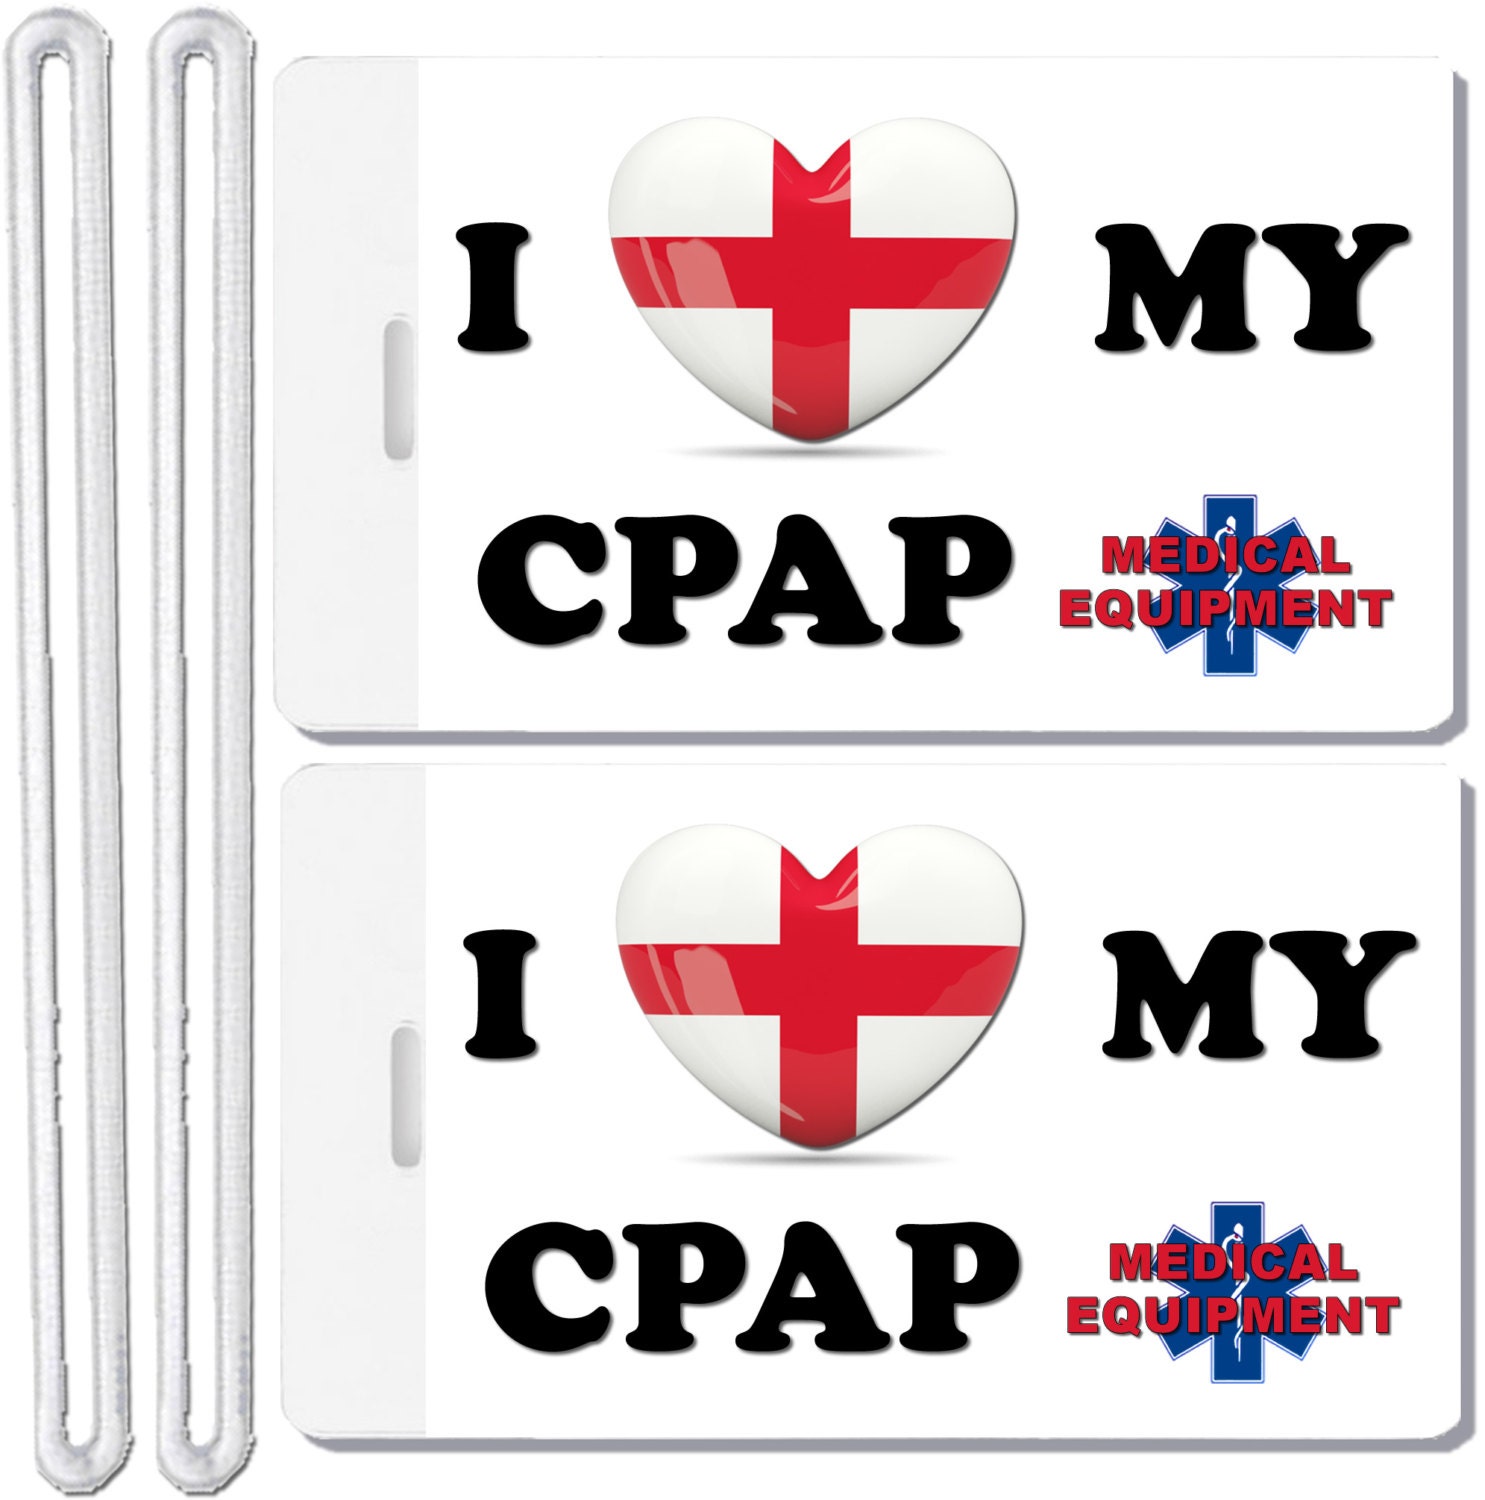 2x-medical-equipment-luggage-tags-baggage-i-love-my-cpap-tsa-etsy